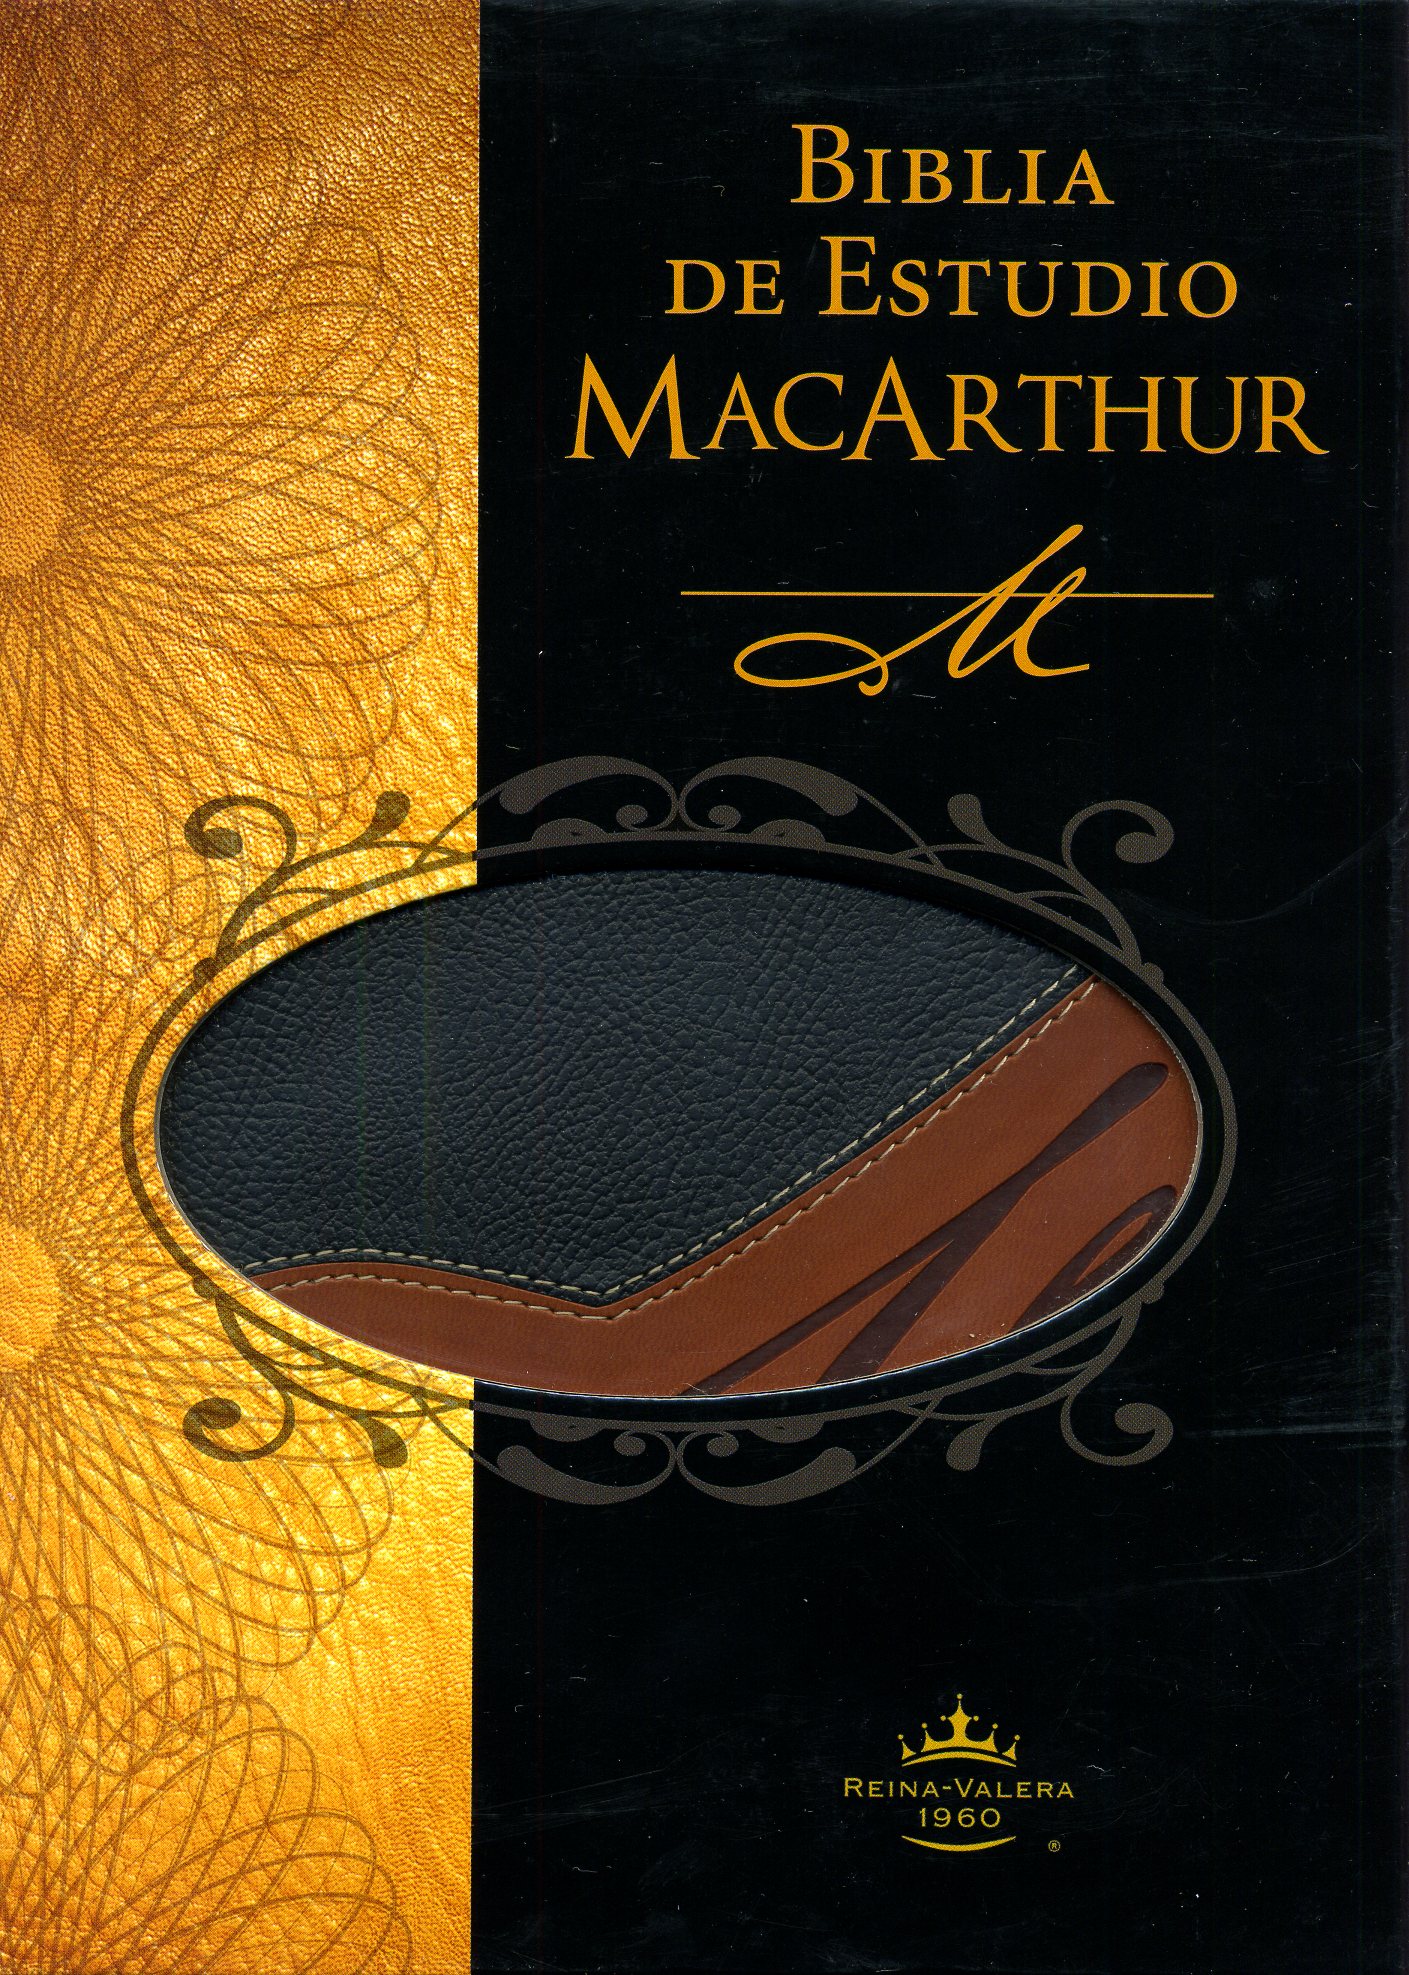 RVR 1960 Biblia de Estudio MacArthur